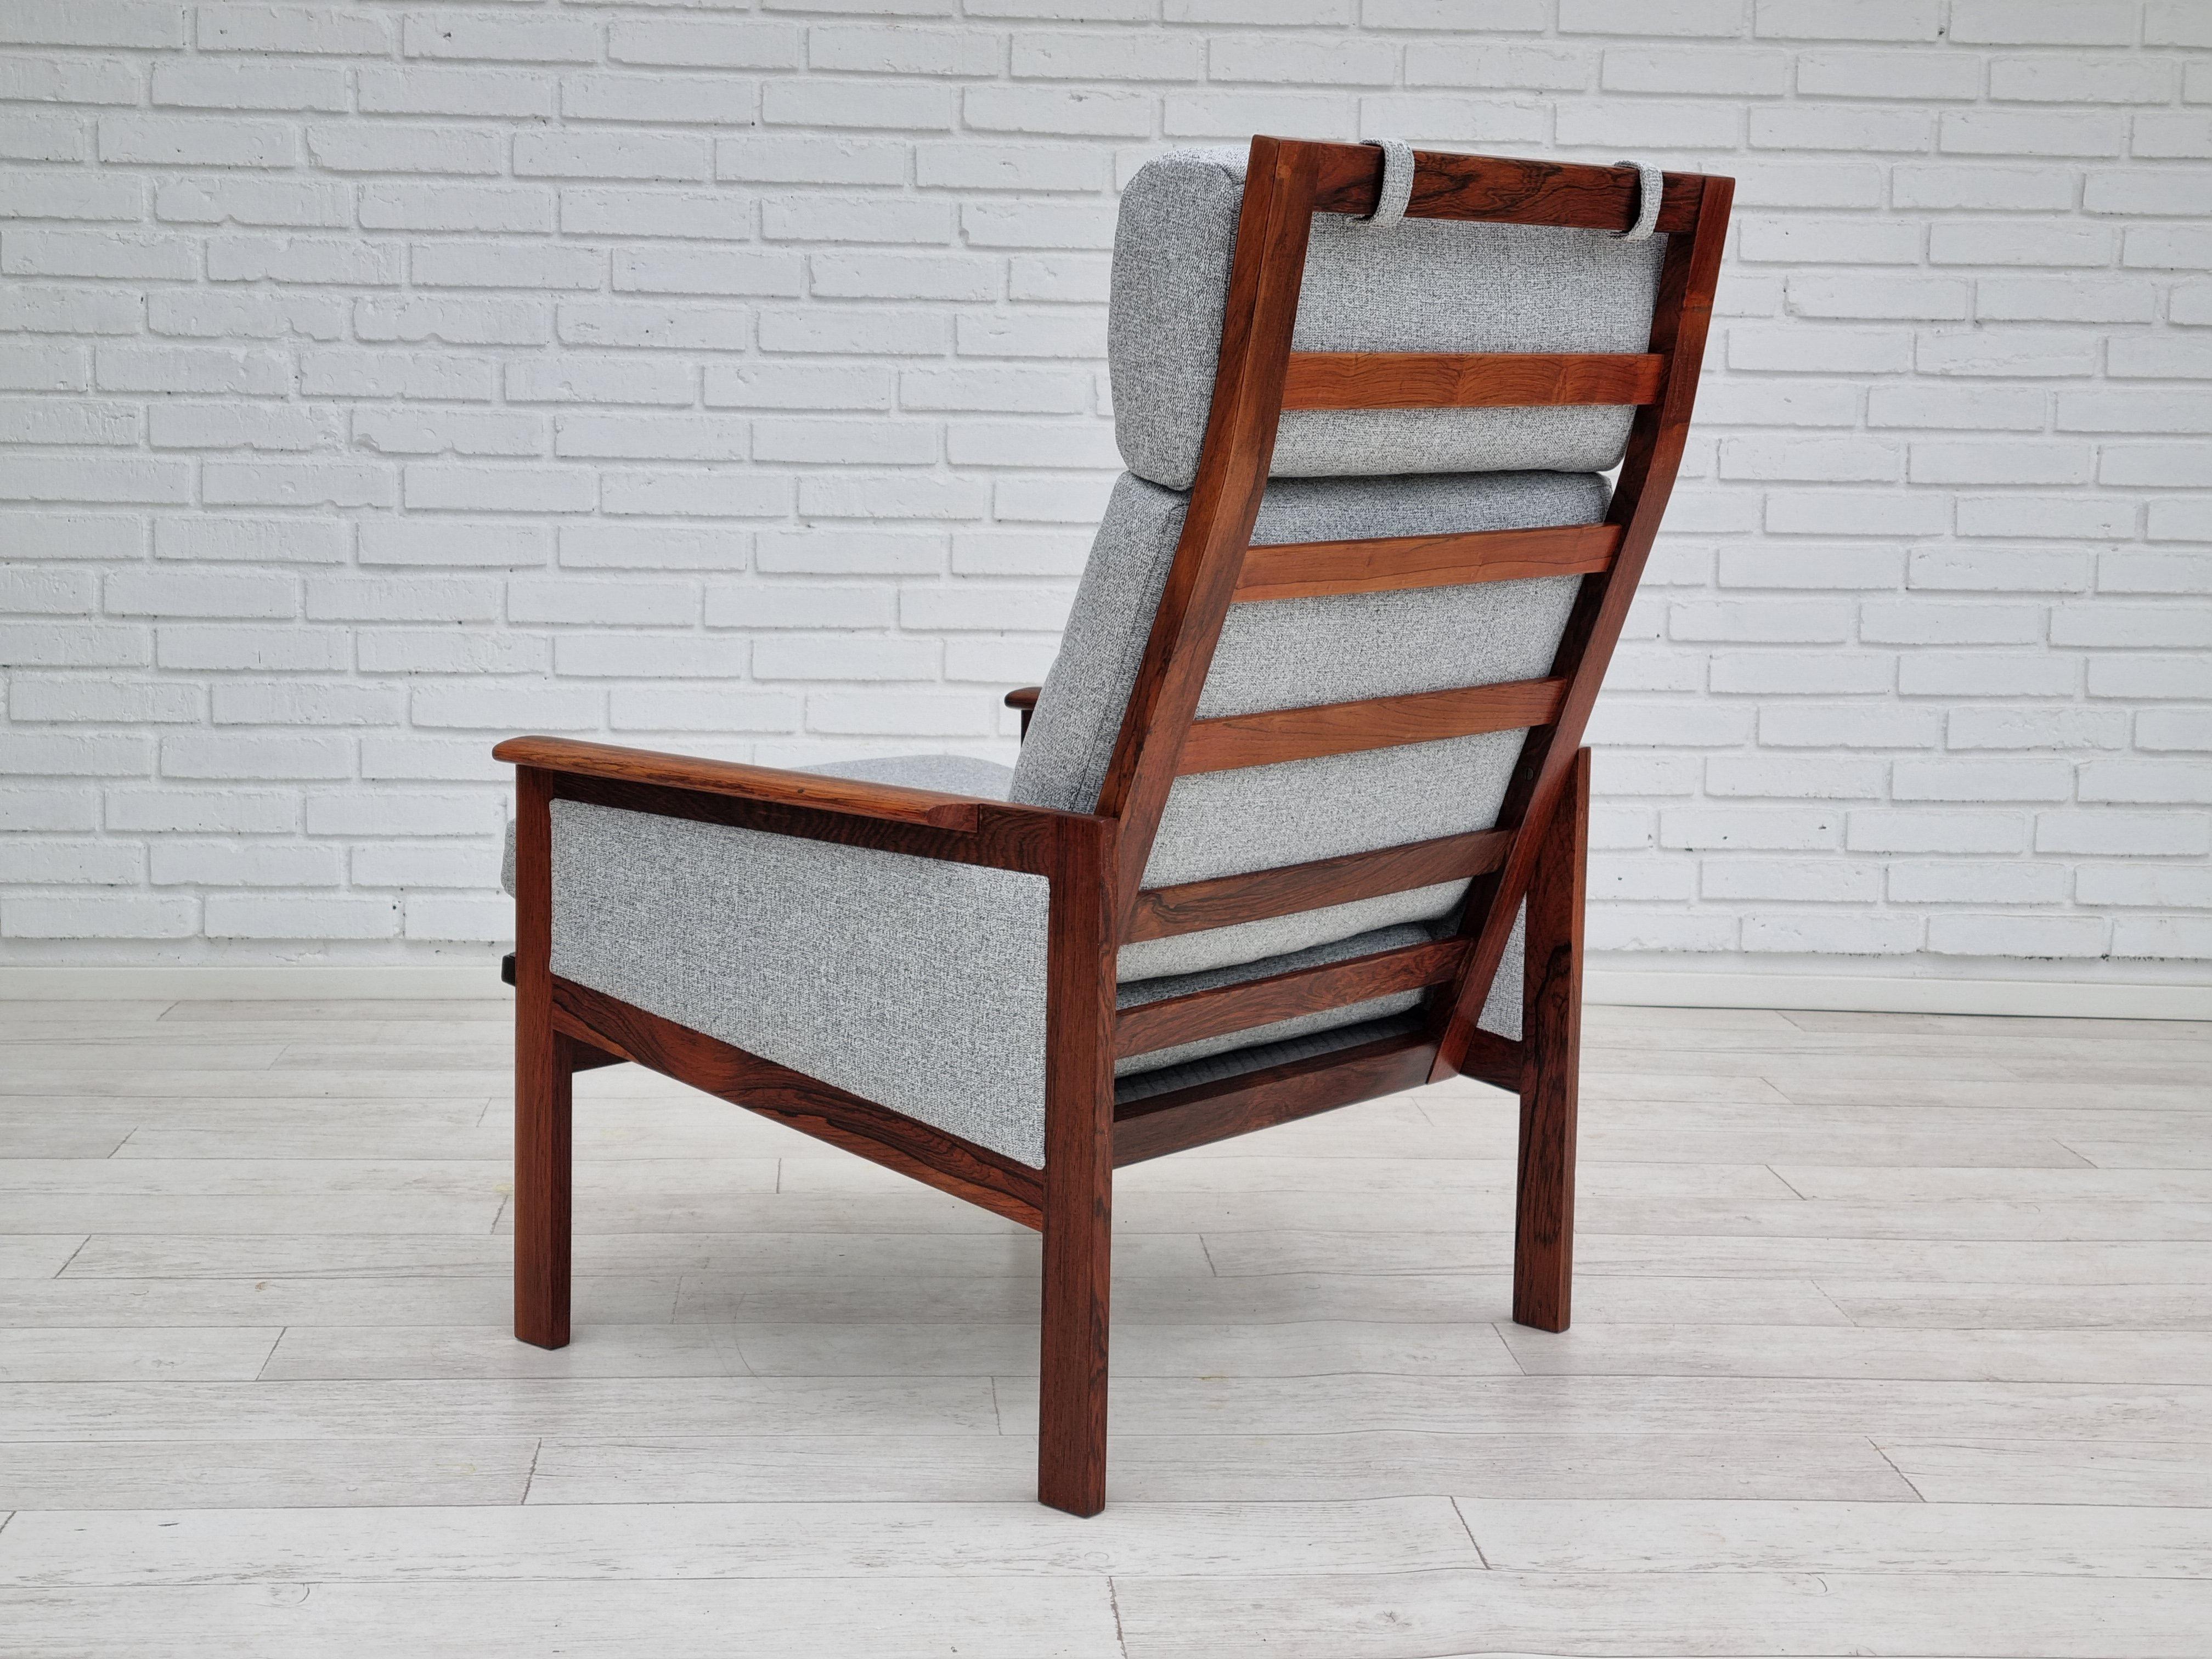 70s, Danish design by Illum Wikkelsø, model Capella, renovated armchair, teak For Sale 1